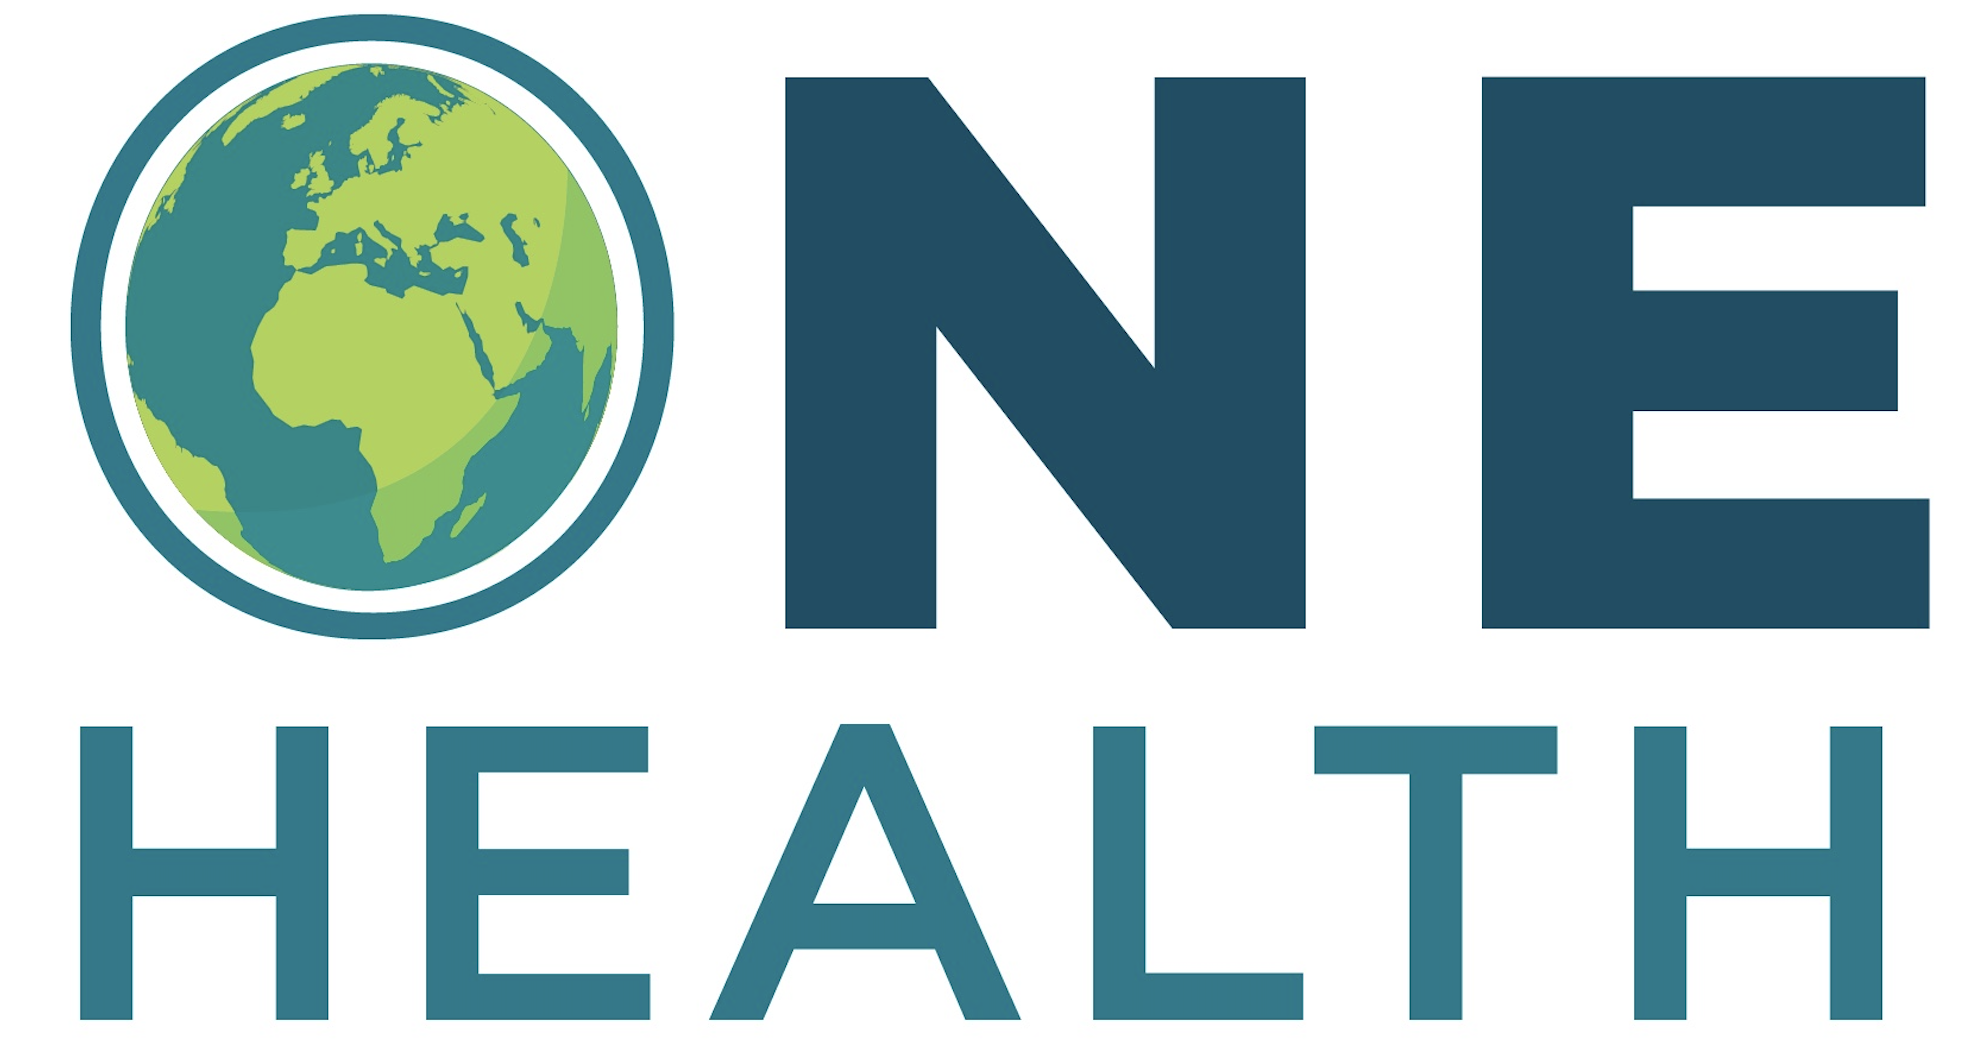 One Health Logo